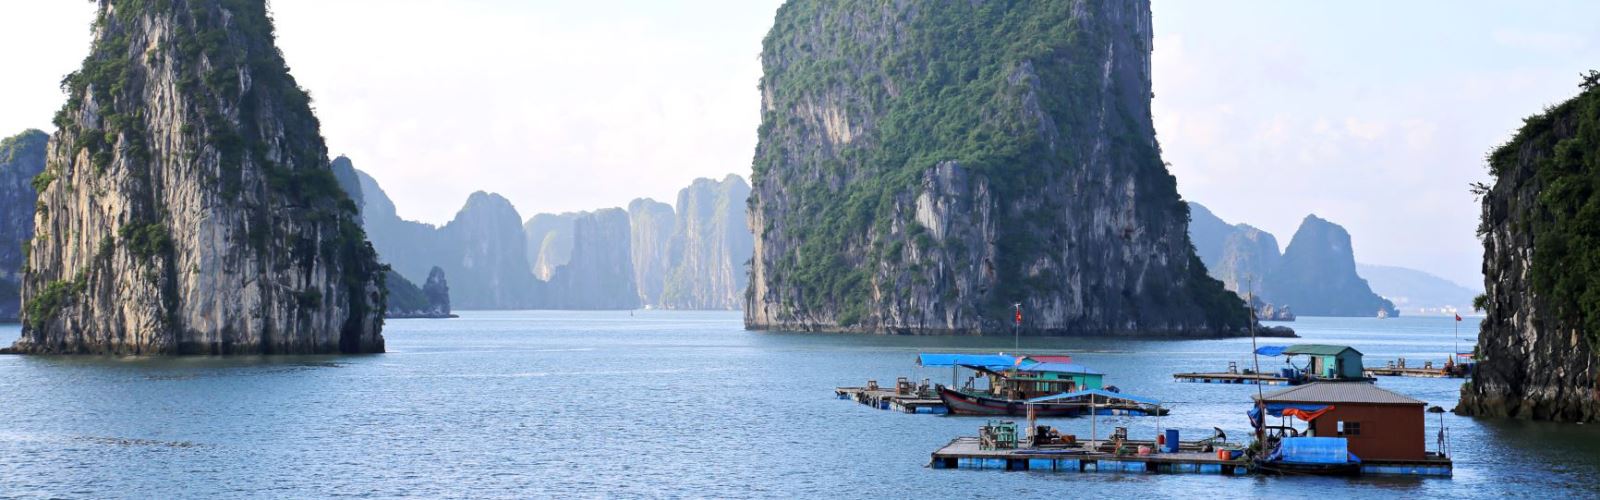 Vietnam Travel | Vietnam Tours |Vietnam Private tours | ilotustours